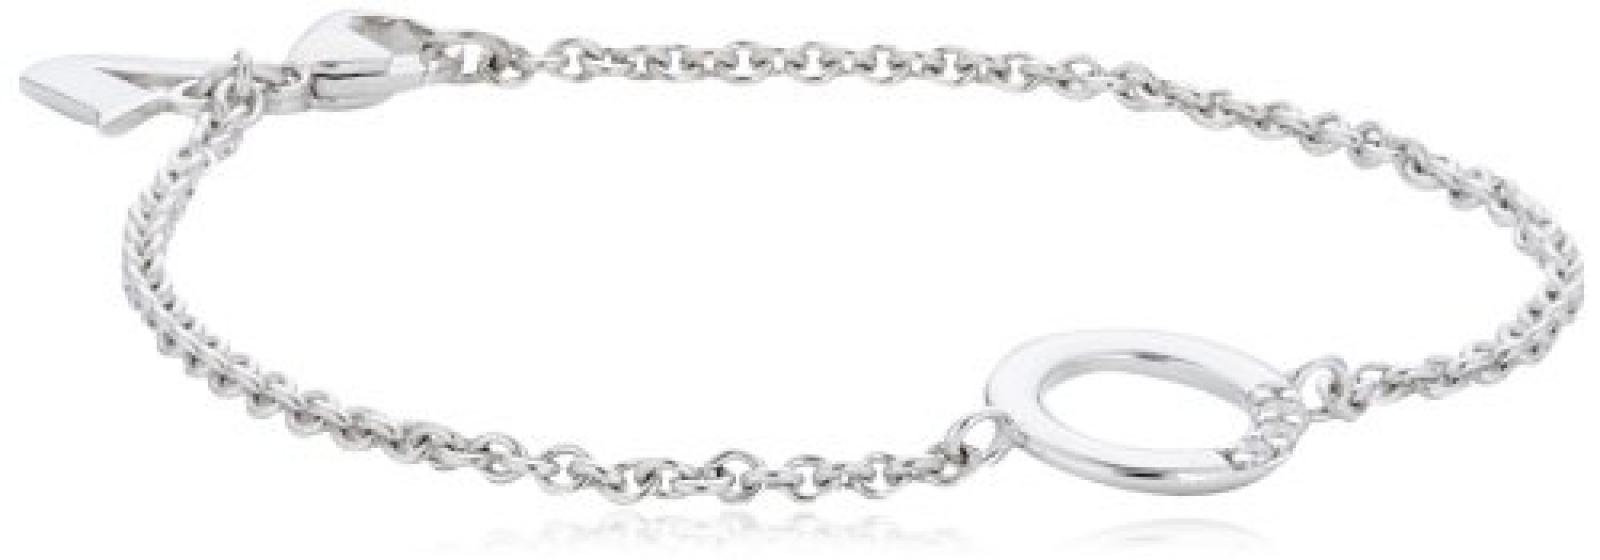 Viventy Damen-Armband 925 Sterling Silber mit 3 Zirkonia in weiss Länge 19 cm 763207 